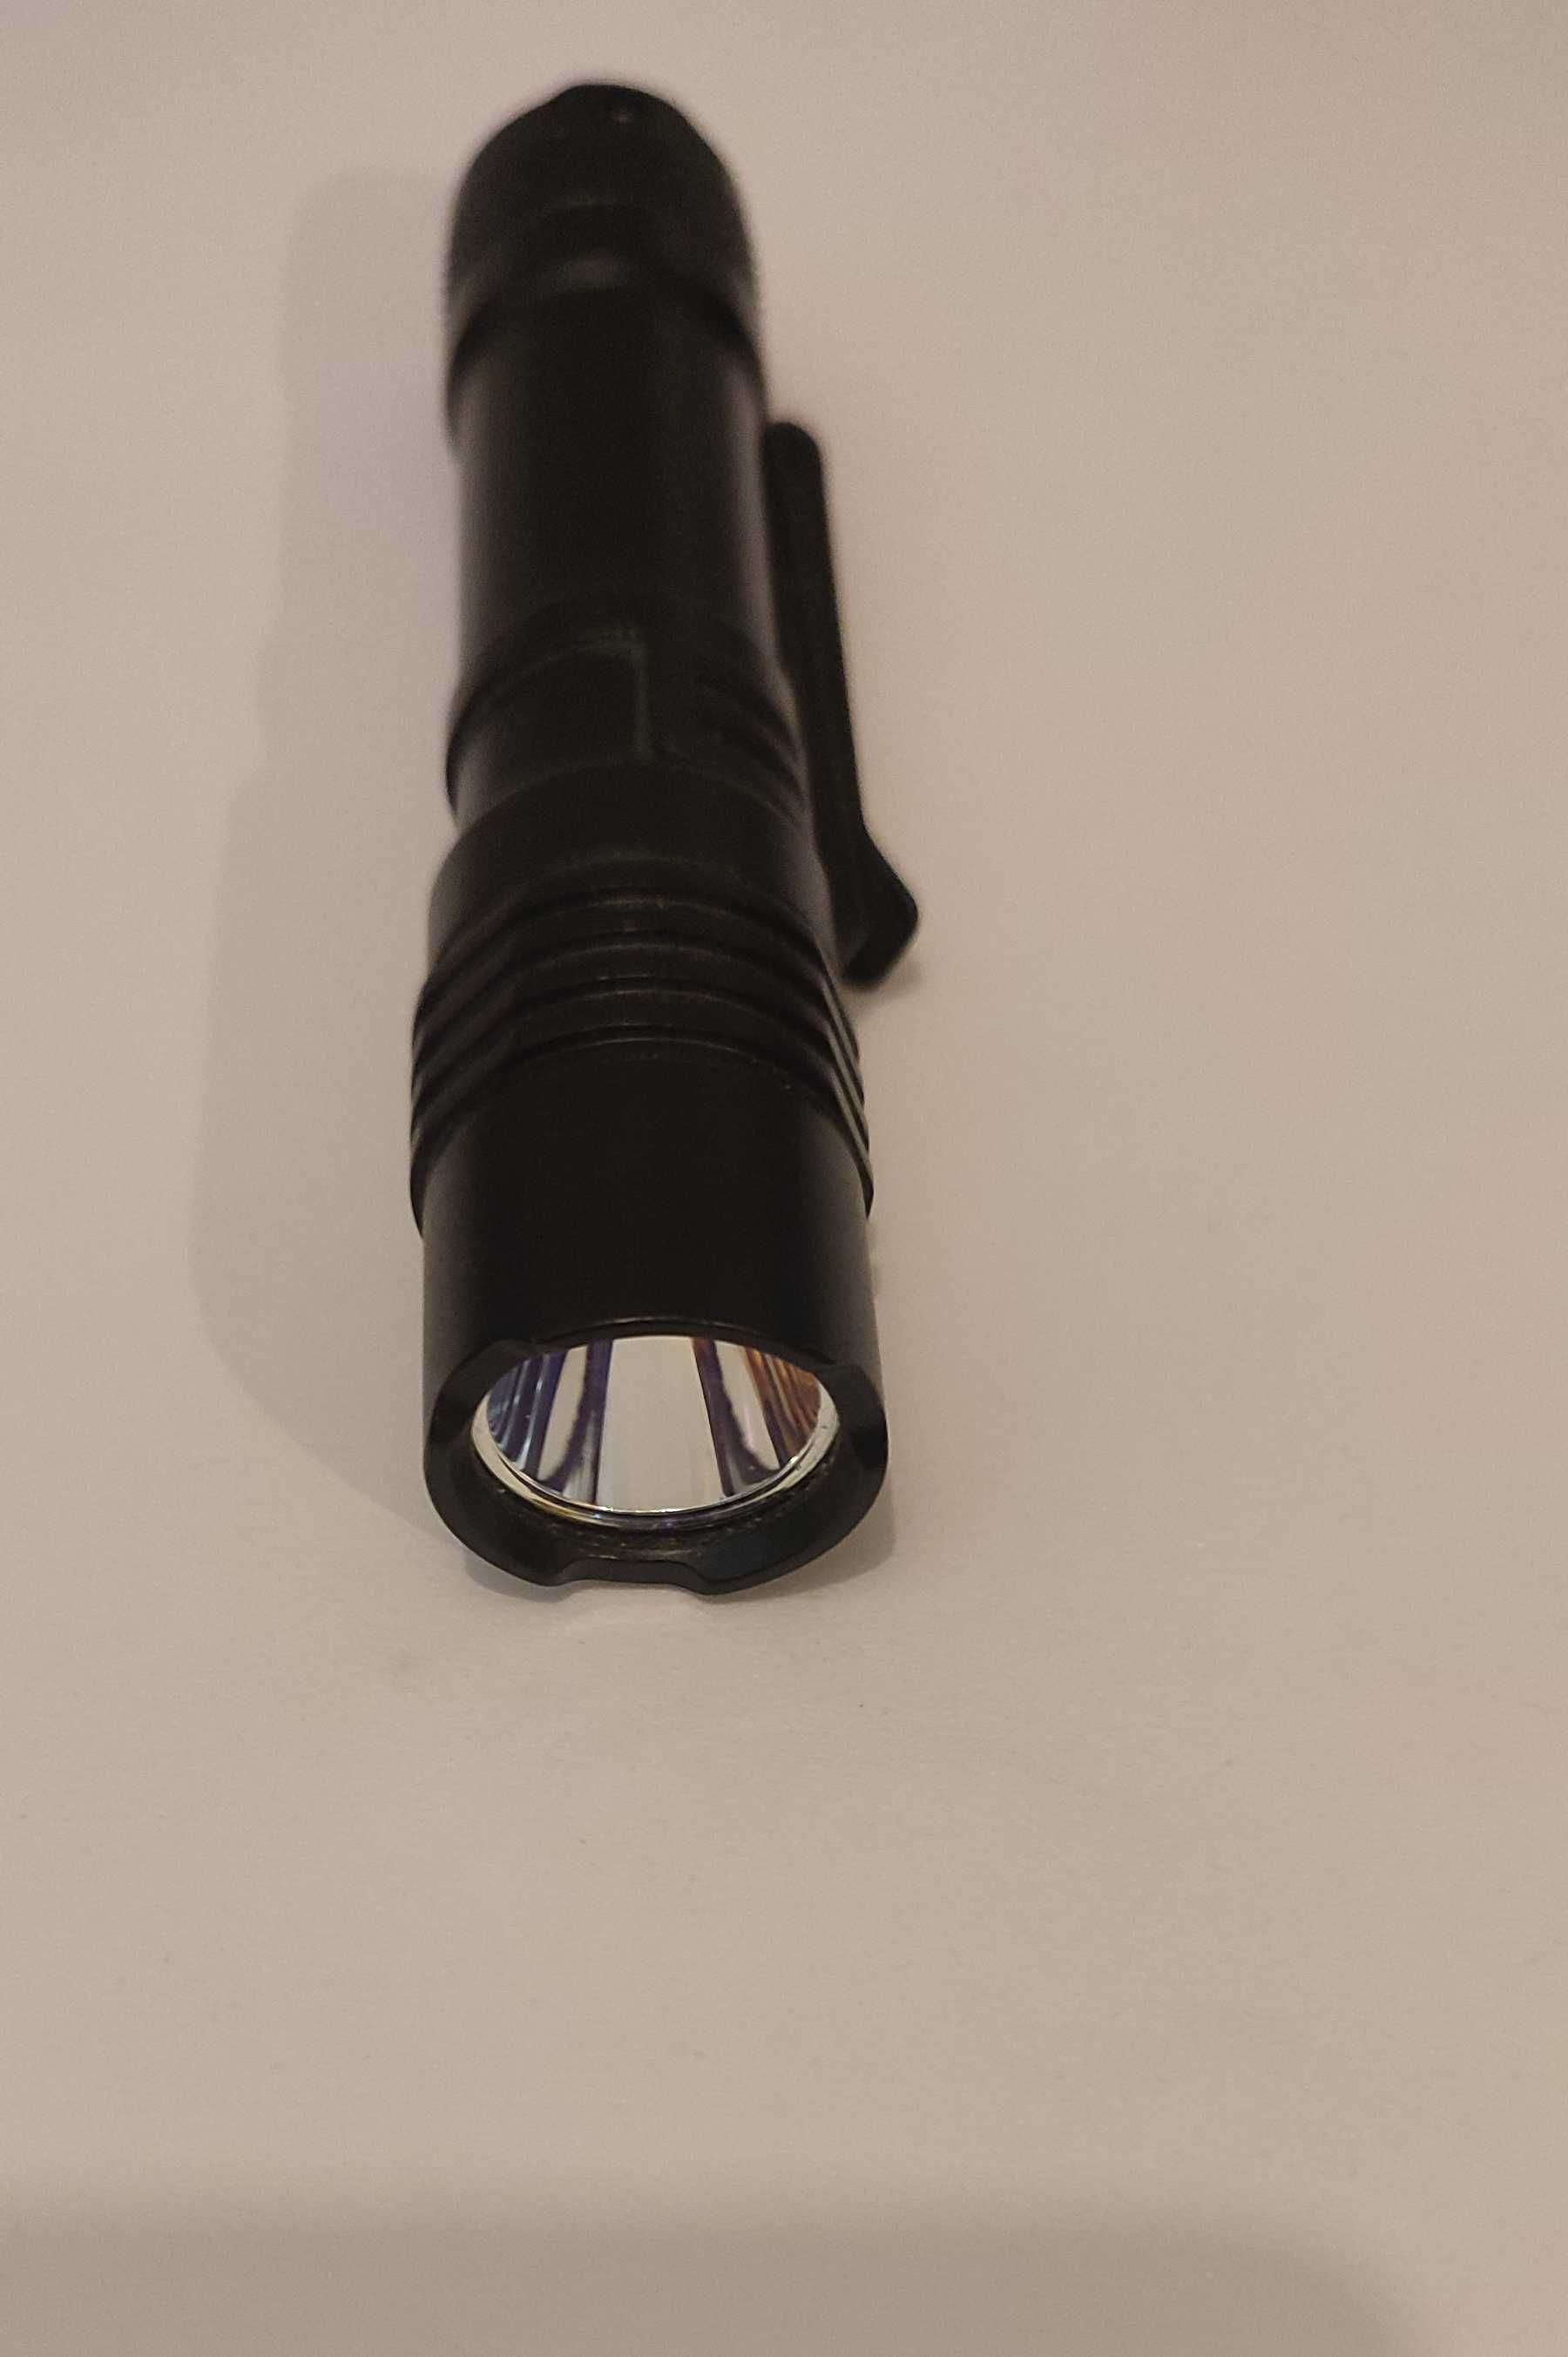 Lanterna tática Streamlight Protac 1 L 1 AA